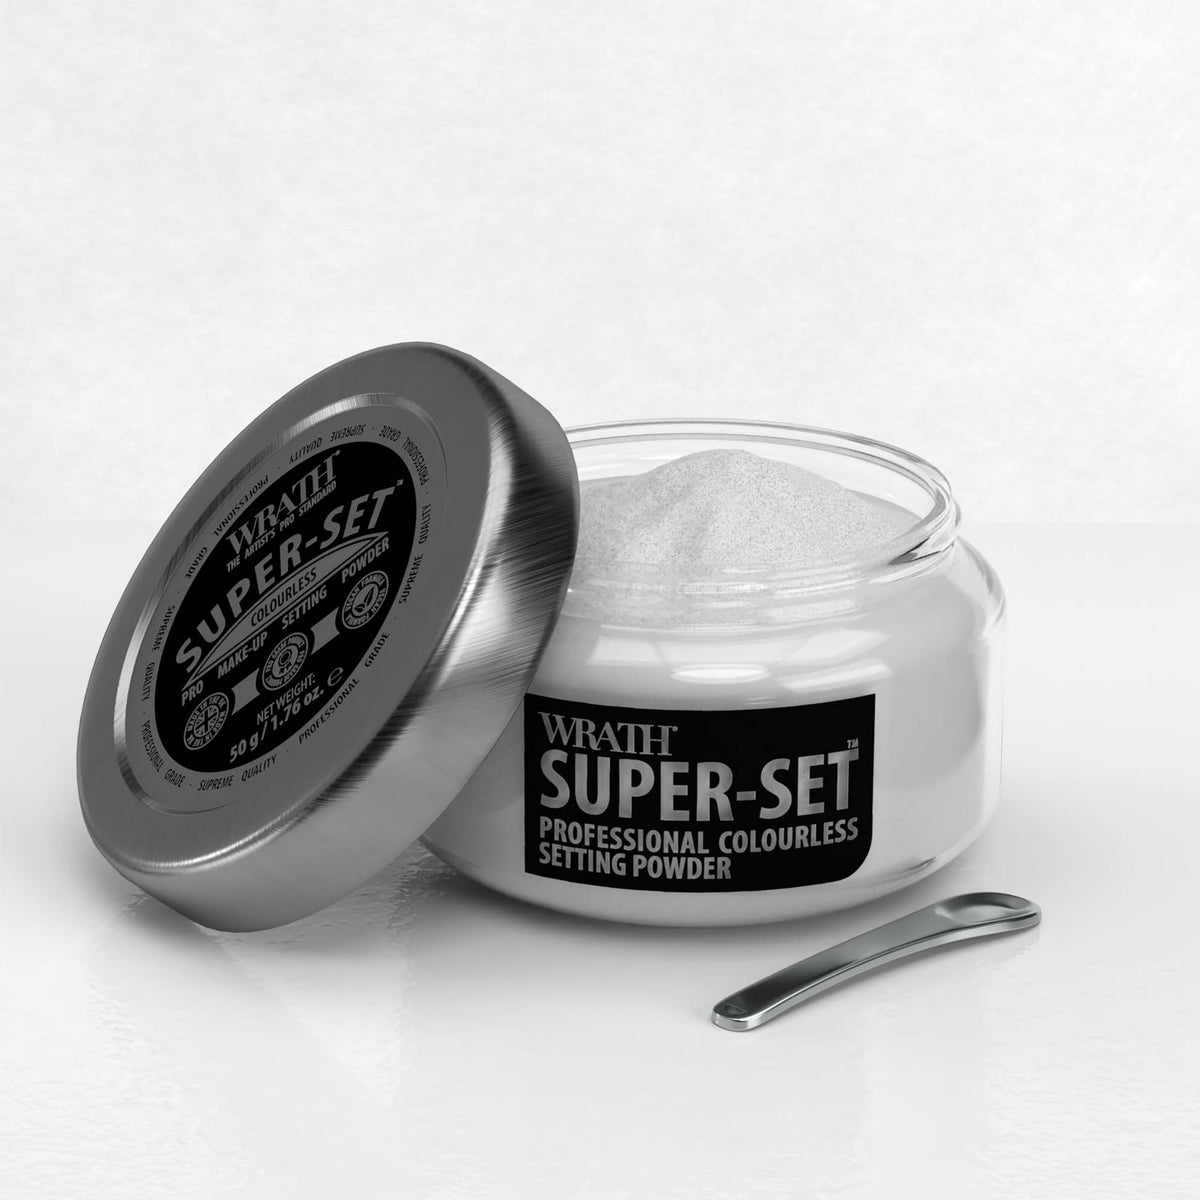 WRATH Super-Set Powder - Professional Setting Powder - Colourless